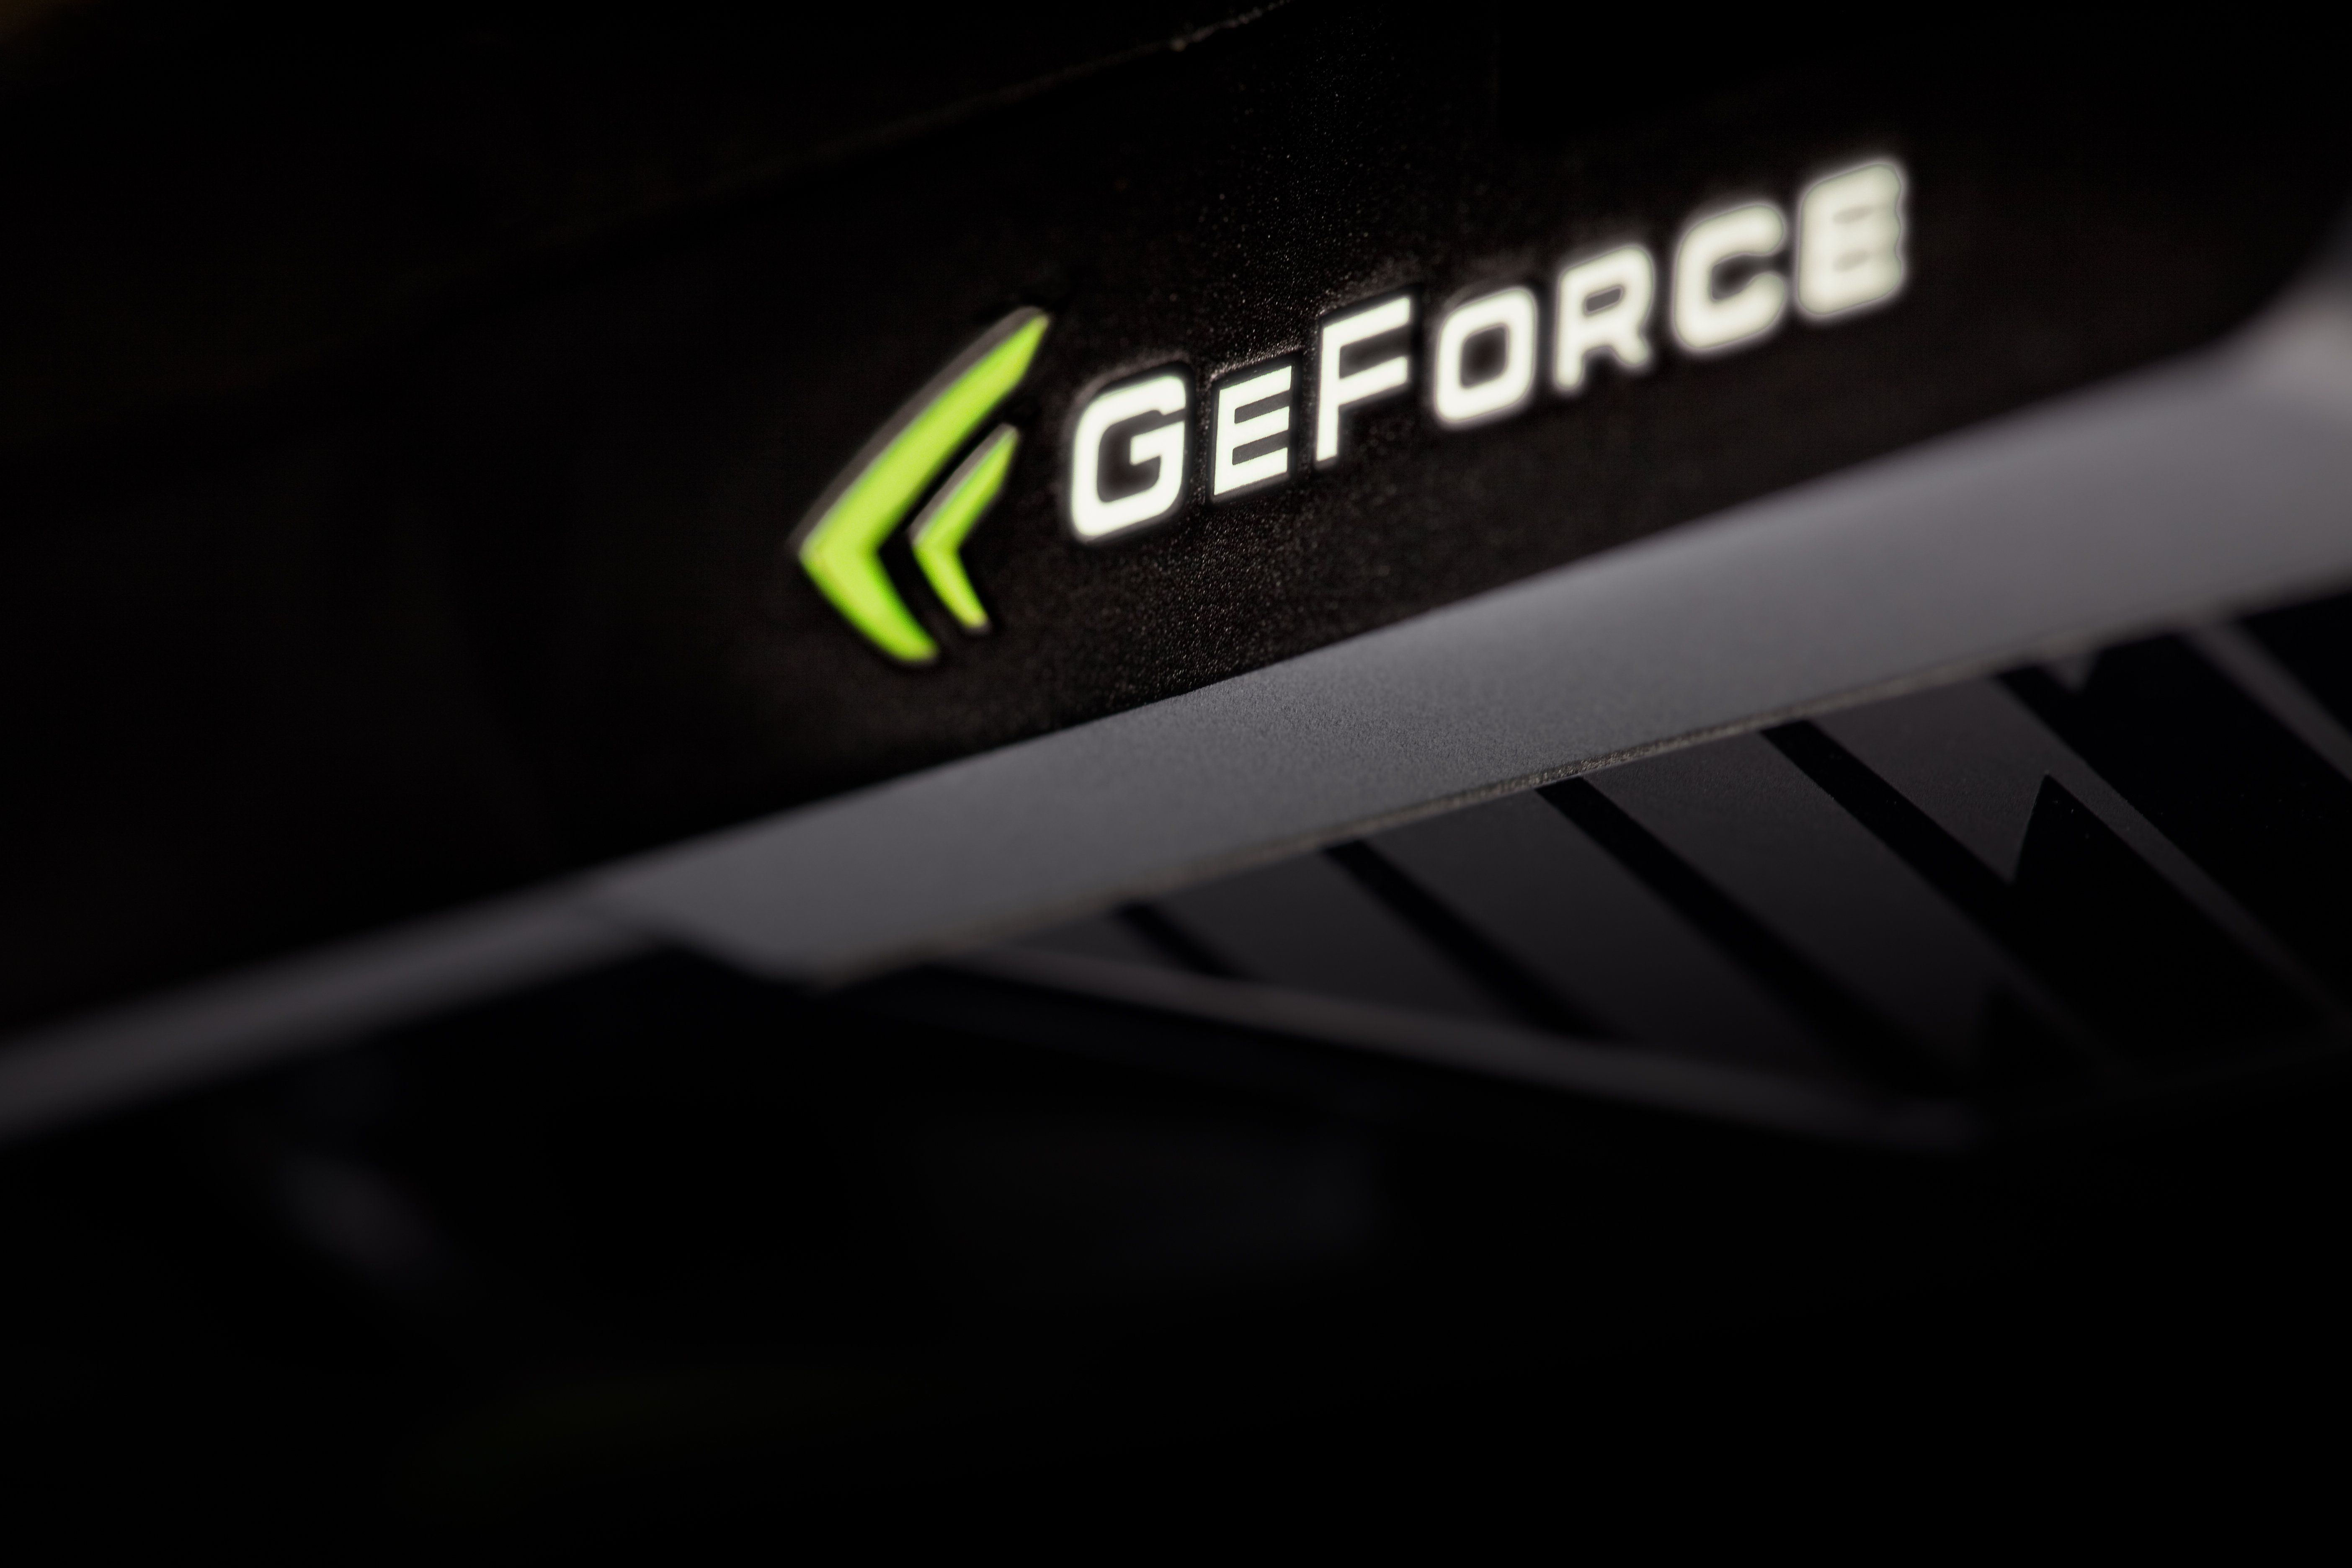 GeForce 355.60 WHQL drivers now available. Geforce wallpaper, Memória, Notícias